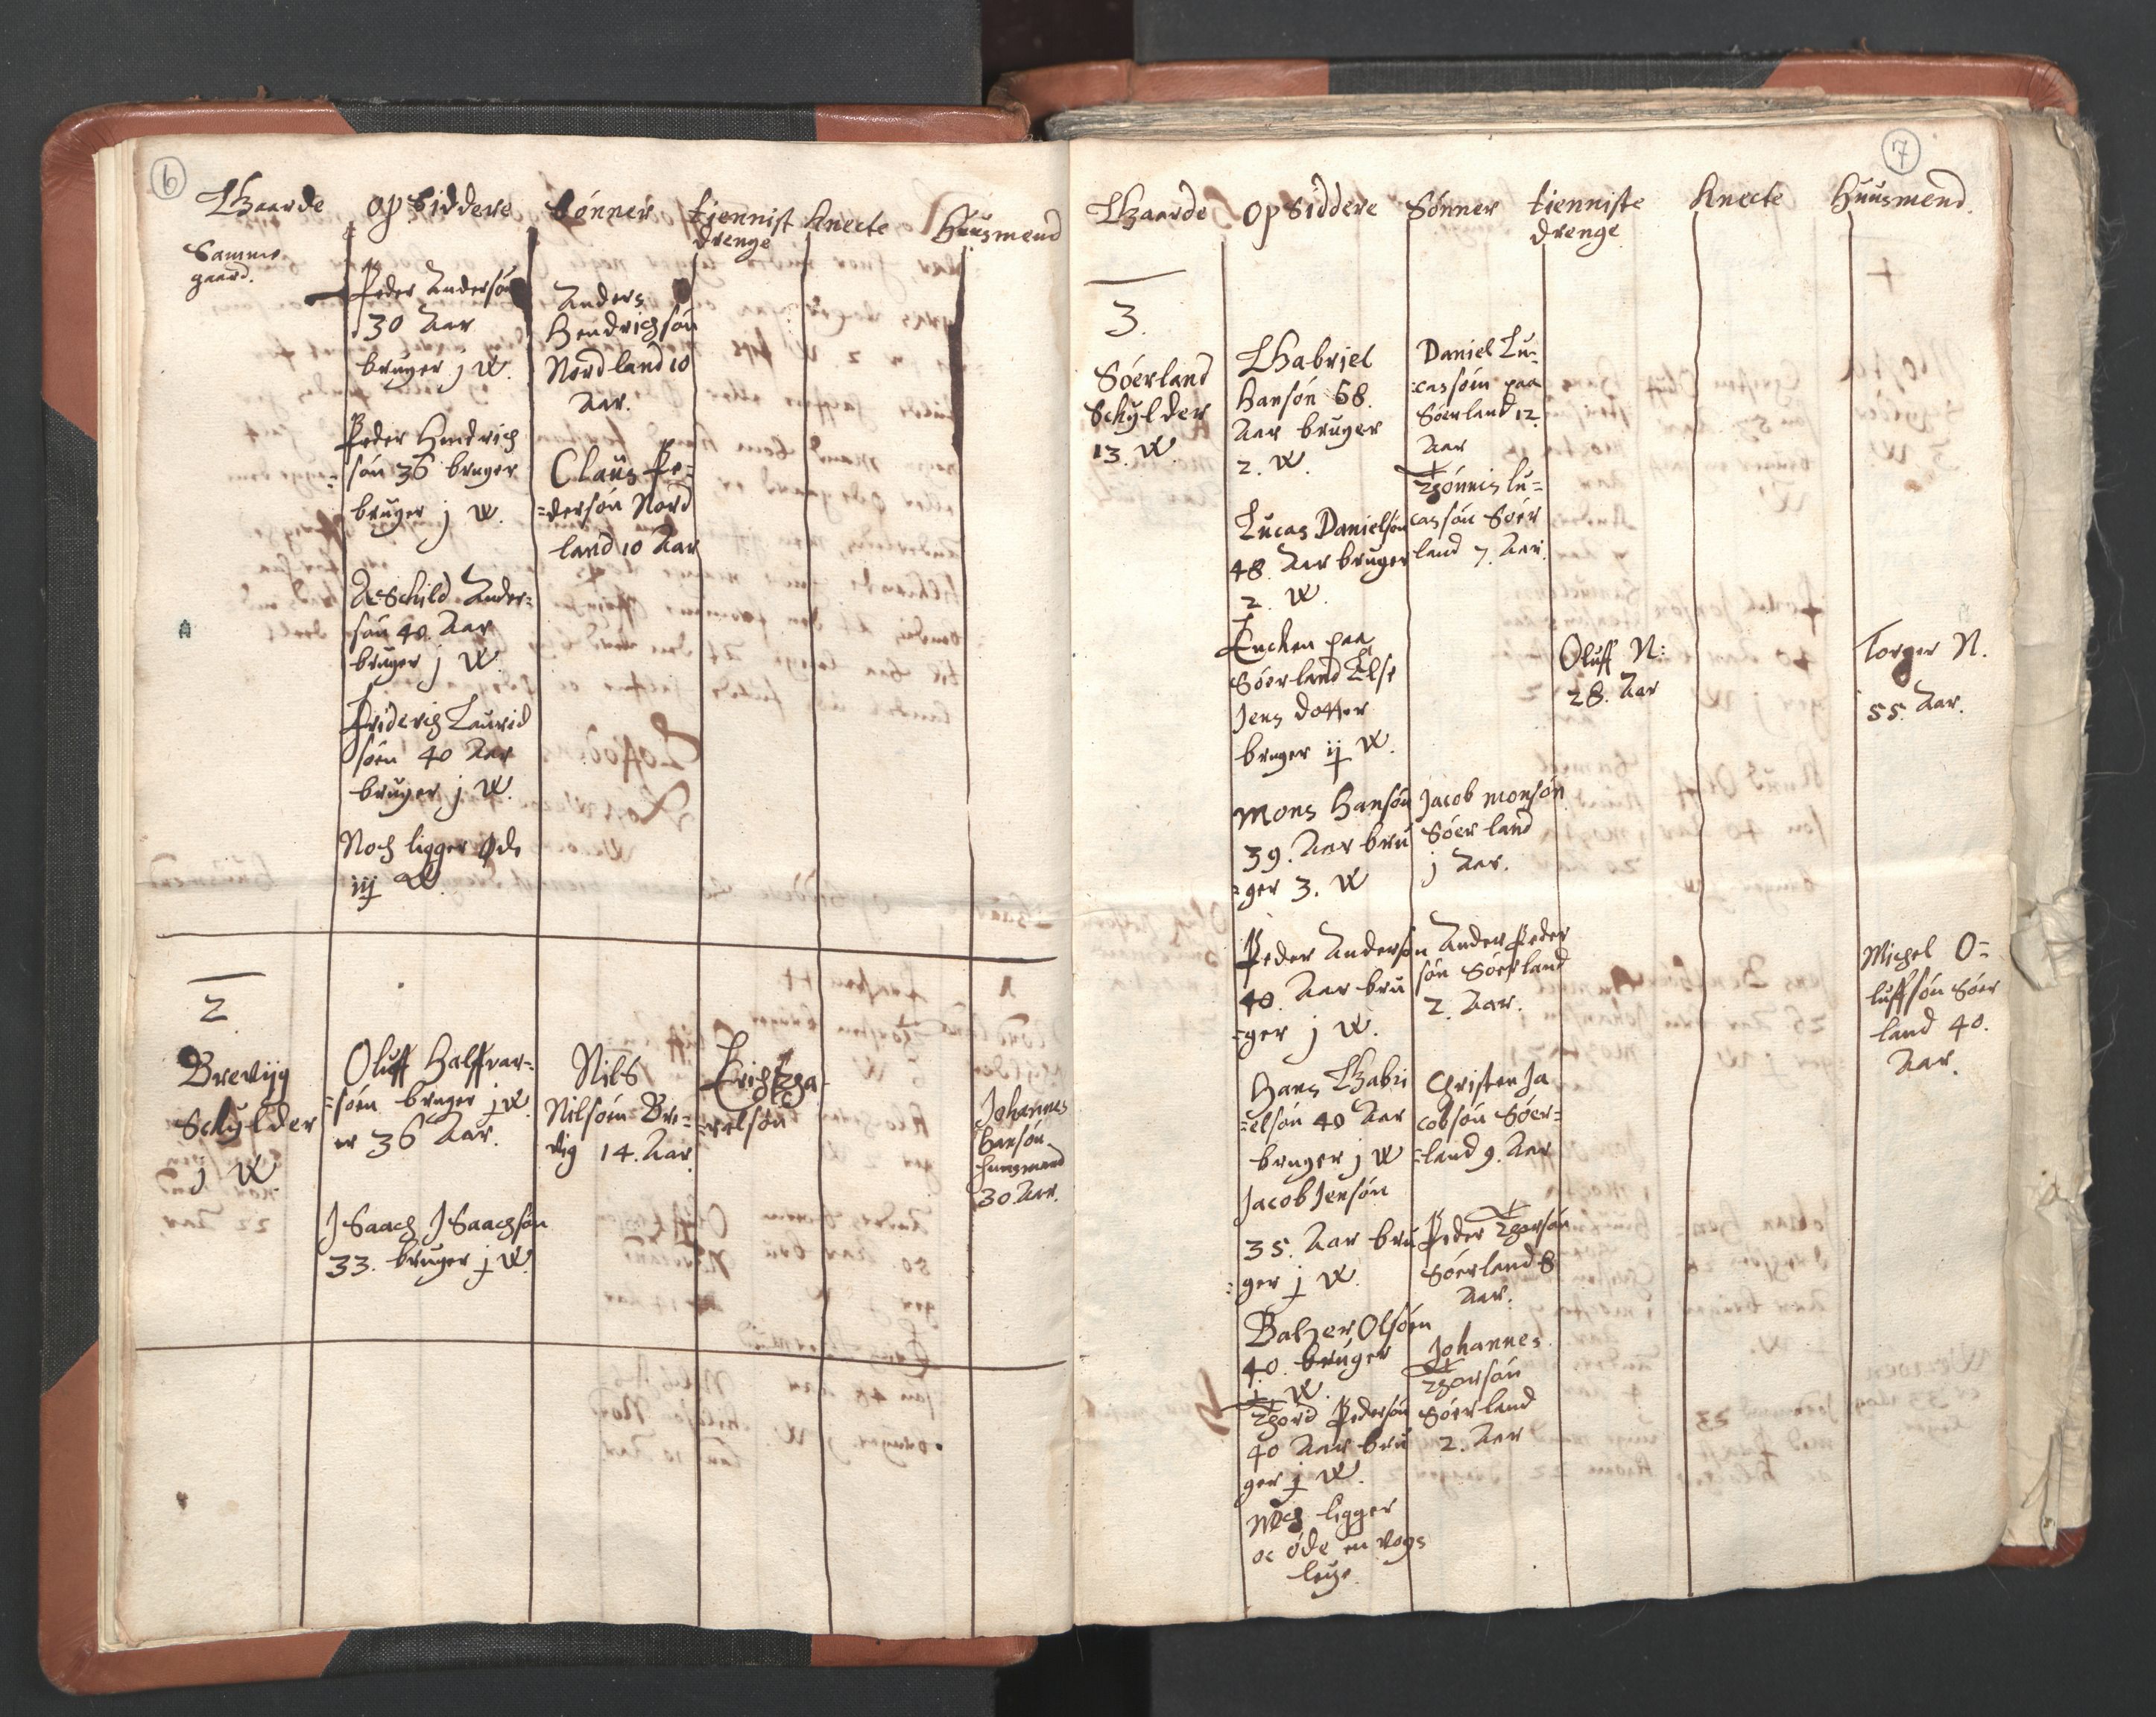 RA, Vicar's Census 1664-1666, no. 36: Lofoten and Vesterålen deanery, Senja deanery and Troms deanery, 1664-1666, p. 6-7